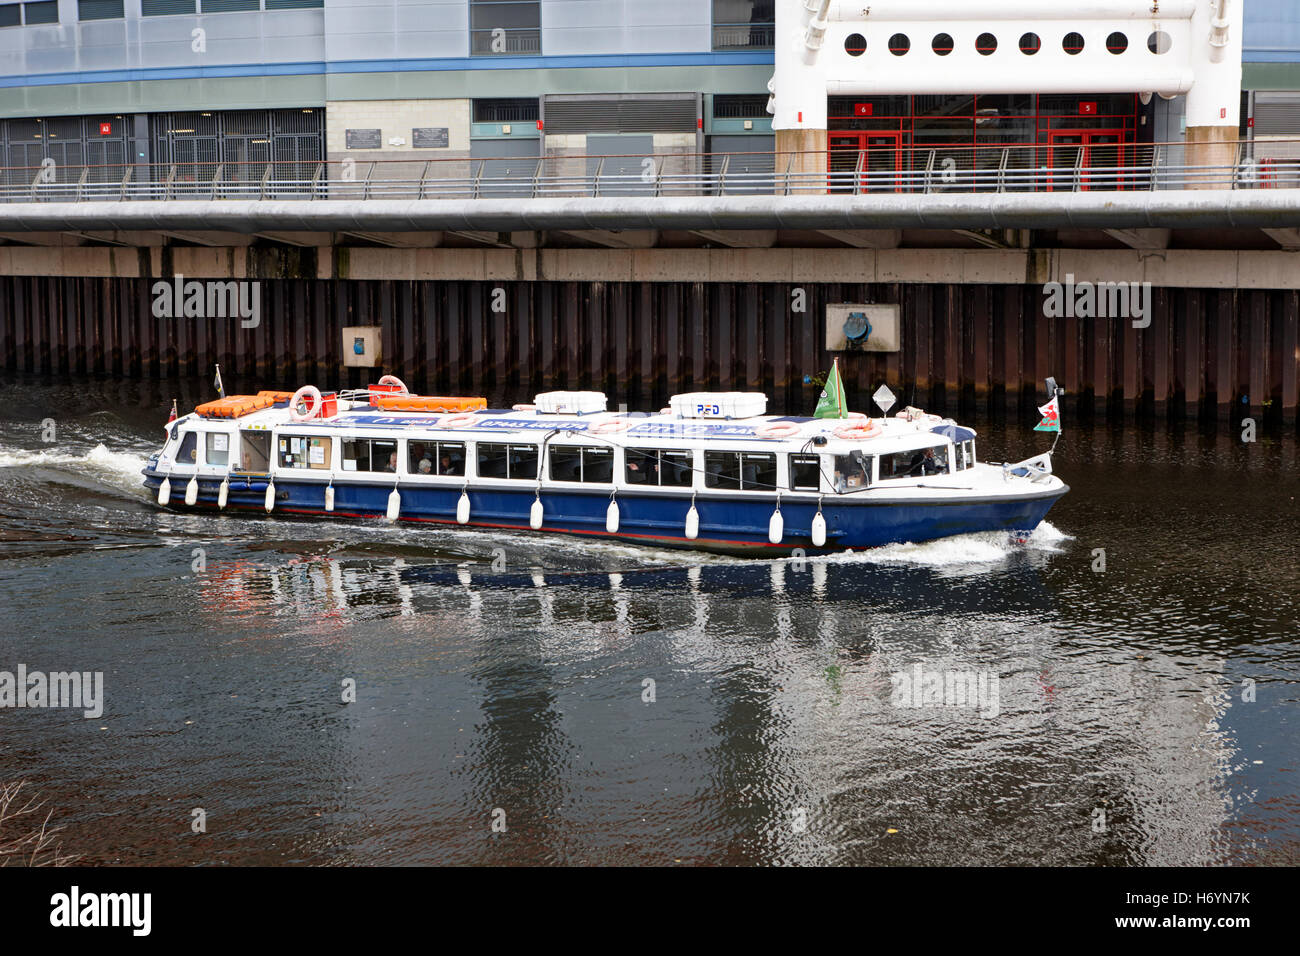 Cardiff-Bootstour am Fluss Taff Wales Großbritannien Stockfoto